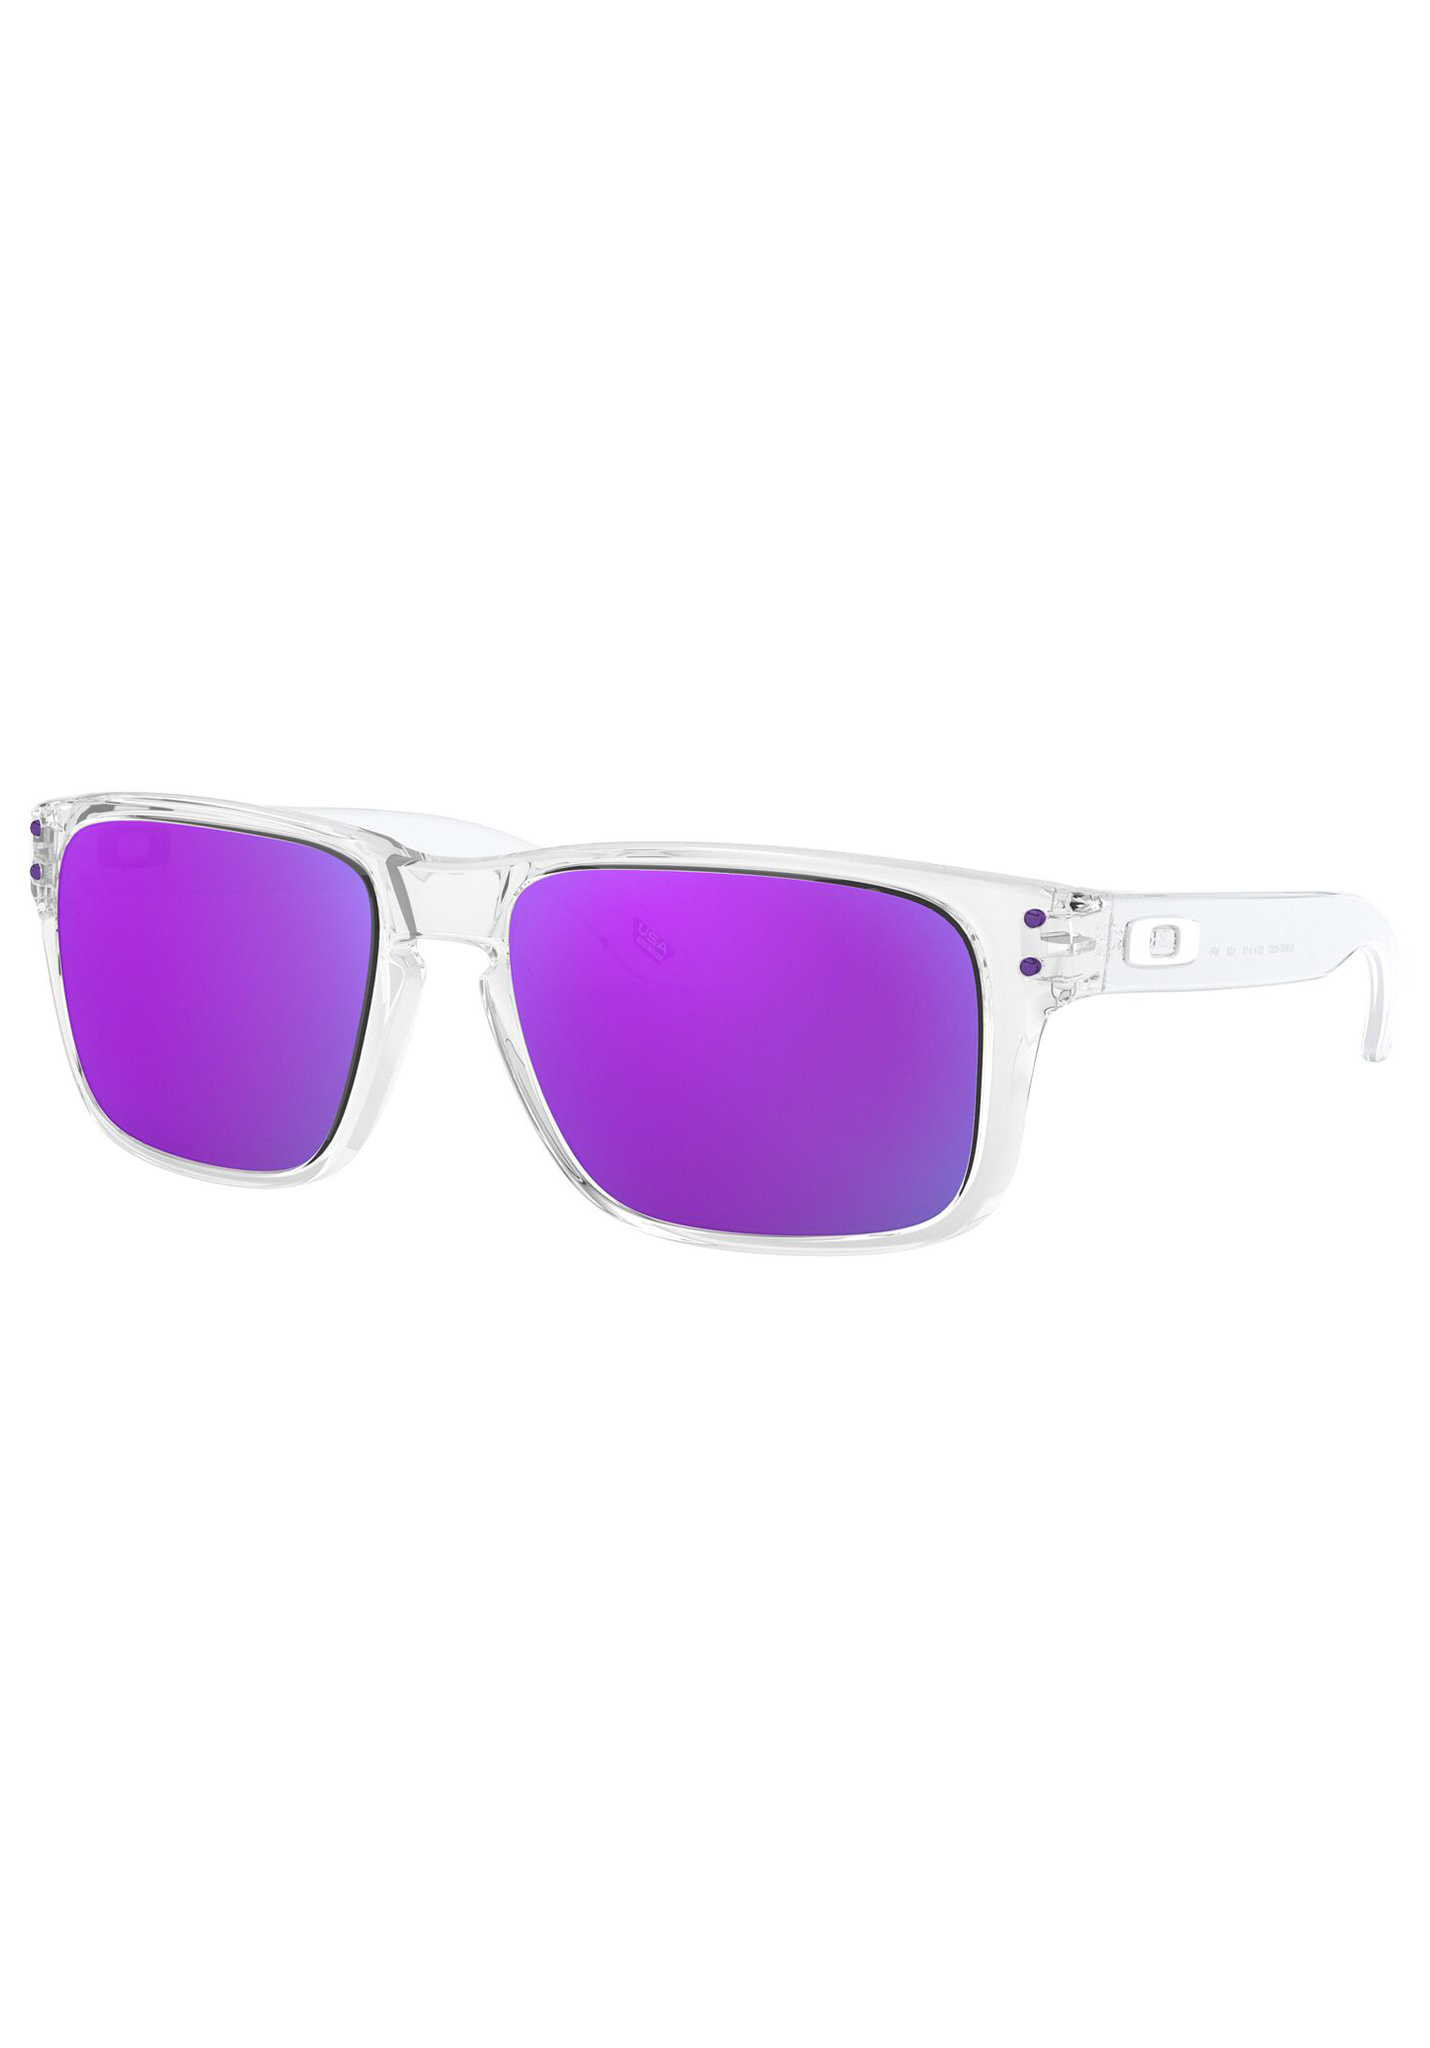 Oakley Holbrook XS Sonnenbrillen poliert klar/prizm violett iridium One Size